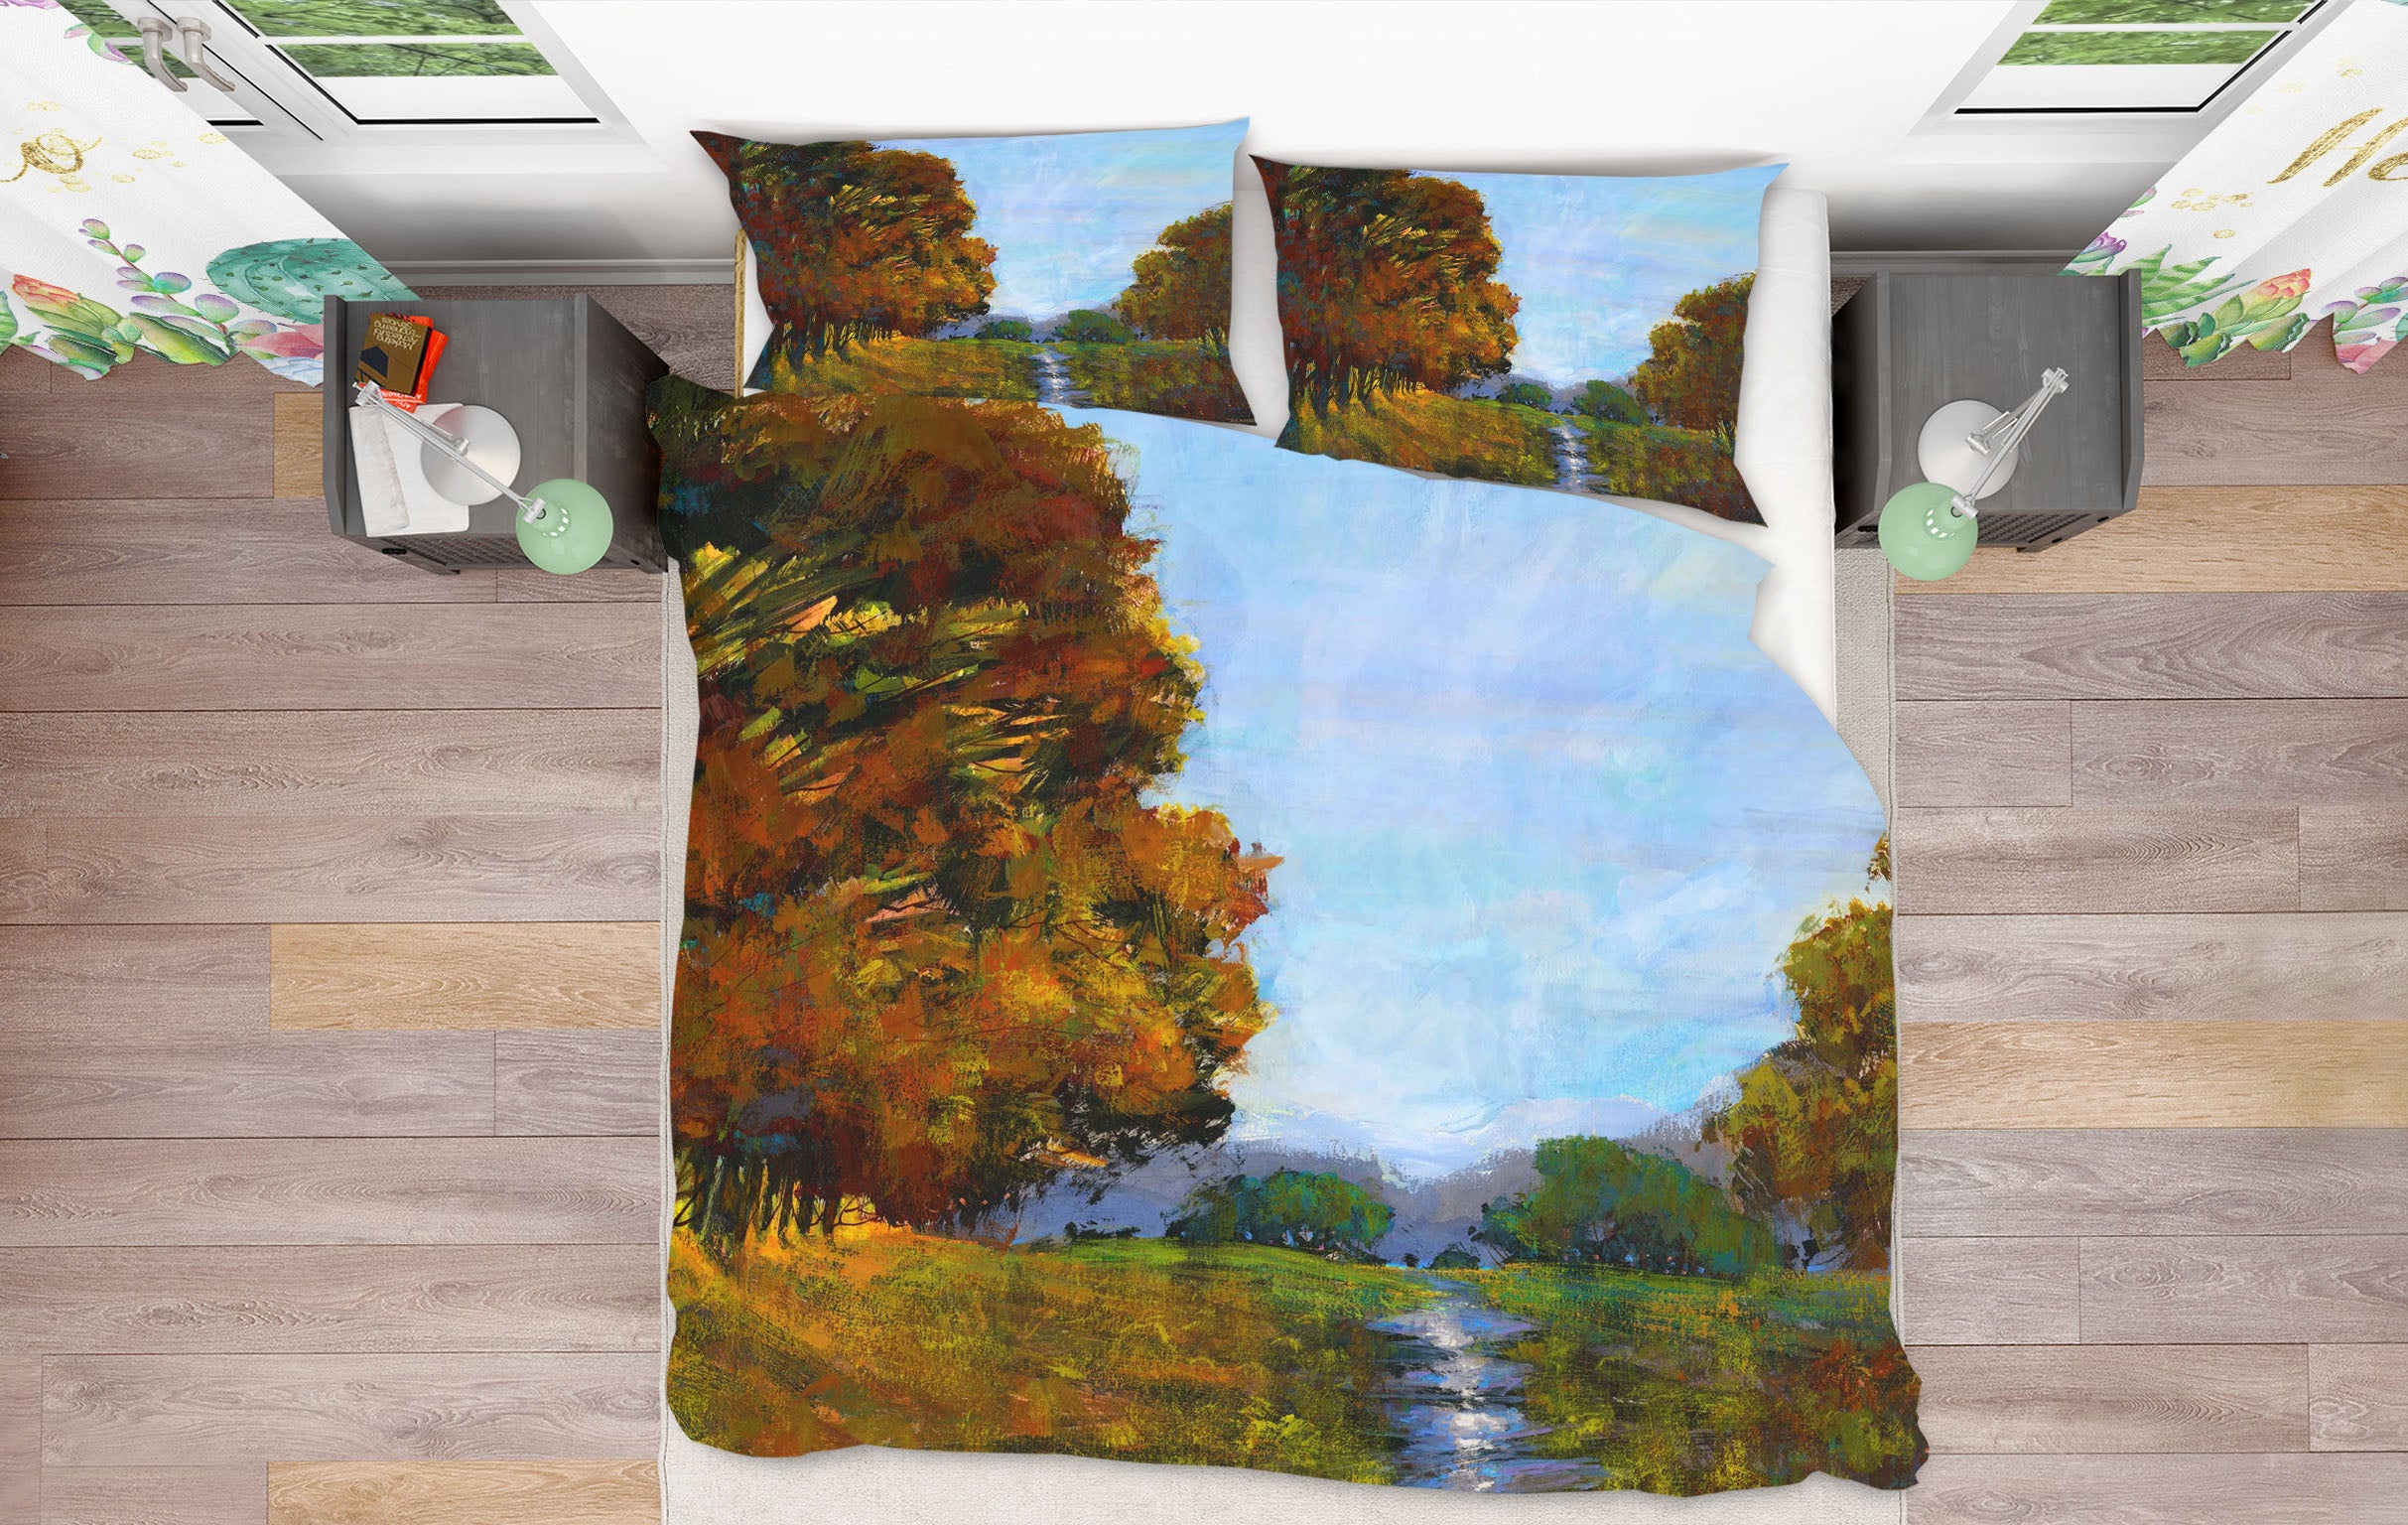 3D Lush Tree River 1017 Michael Tienhaara Bedding Bed Pillowcases Quilt